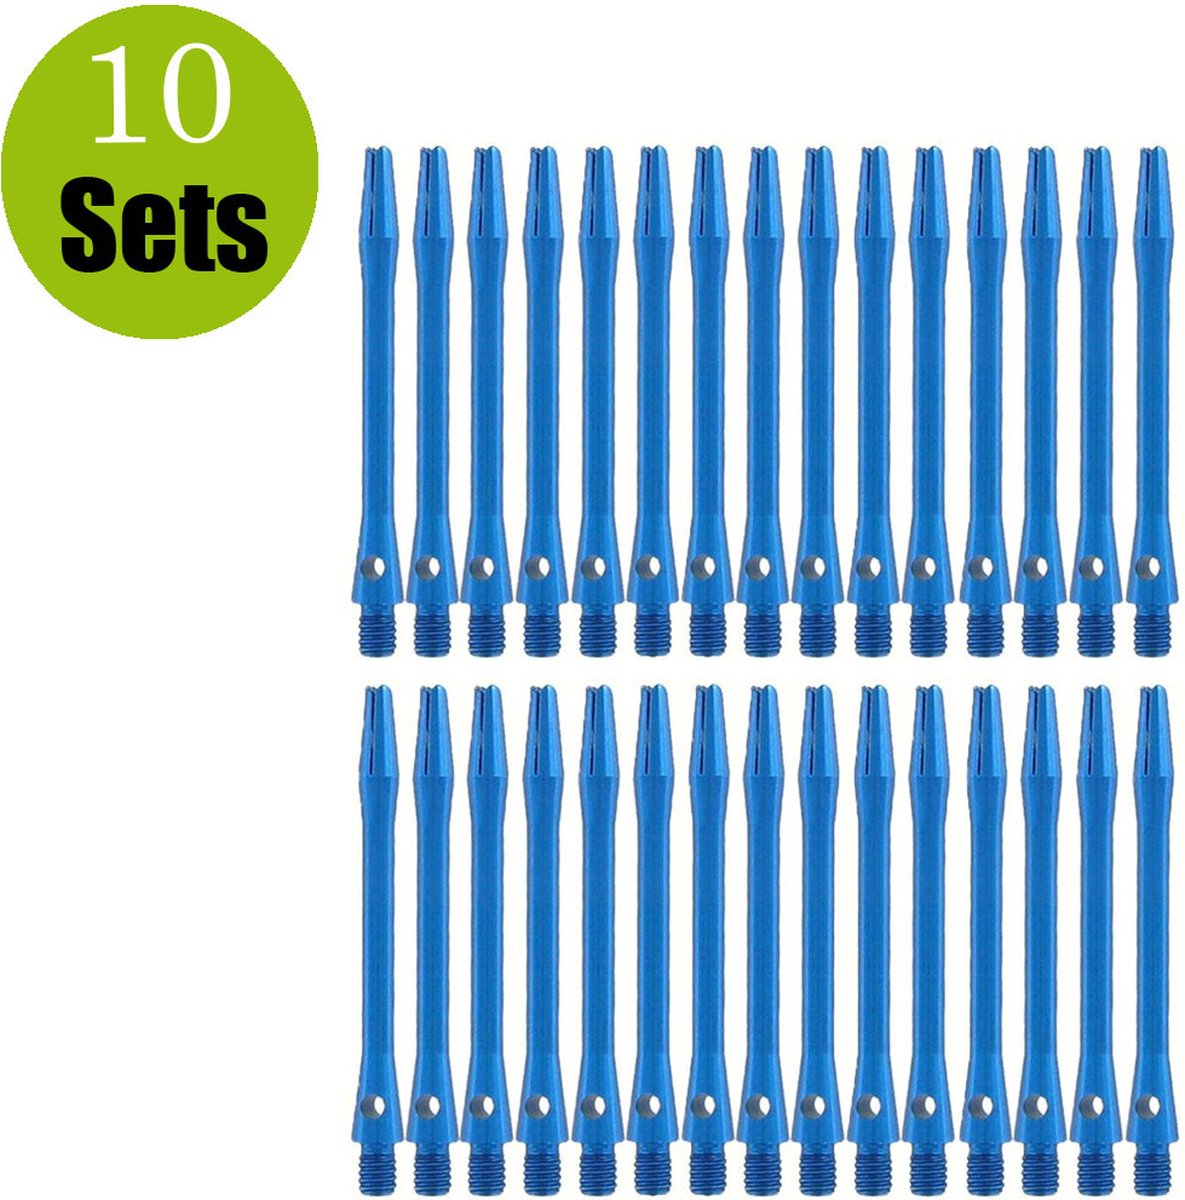 Aluminium Dart Shafts - Blauw - Medium - (10 Sets)